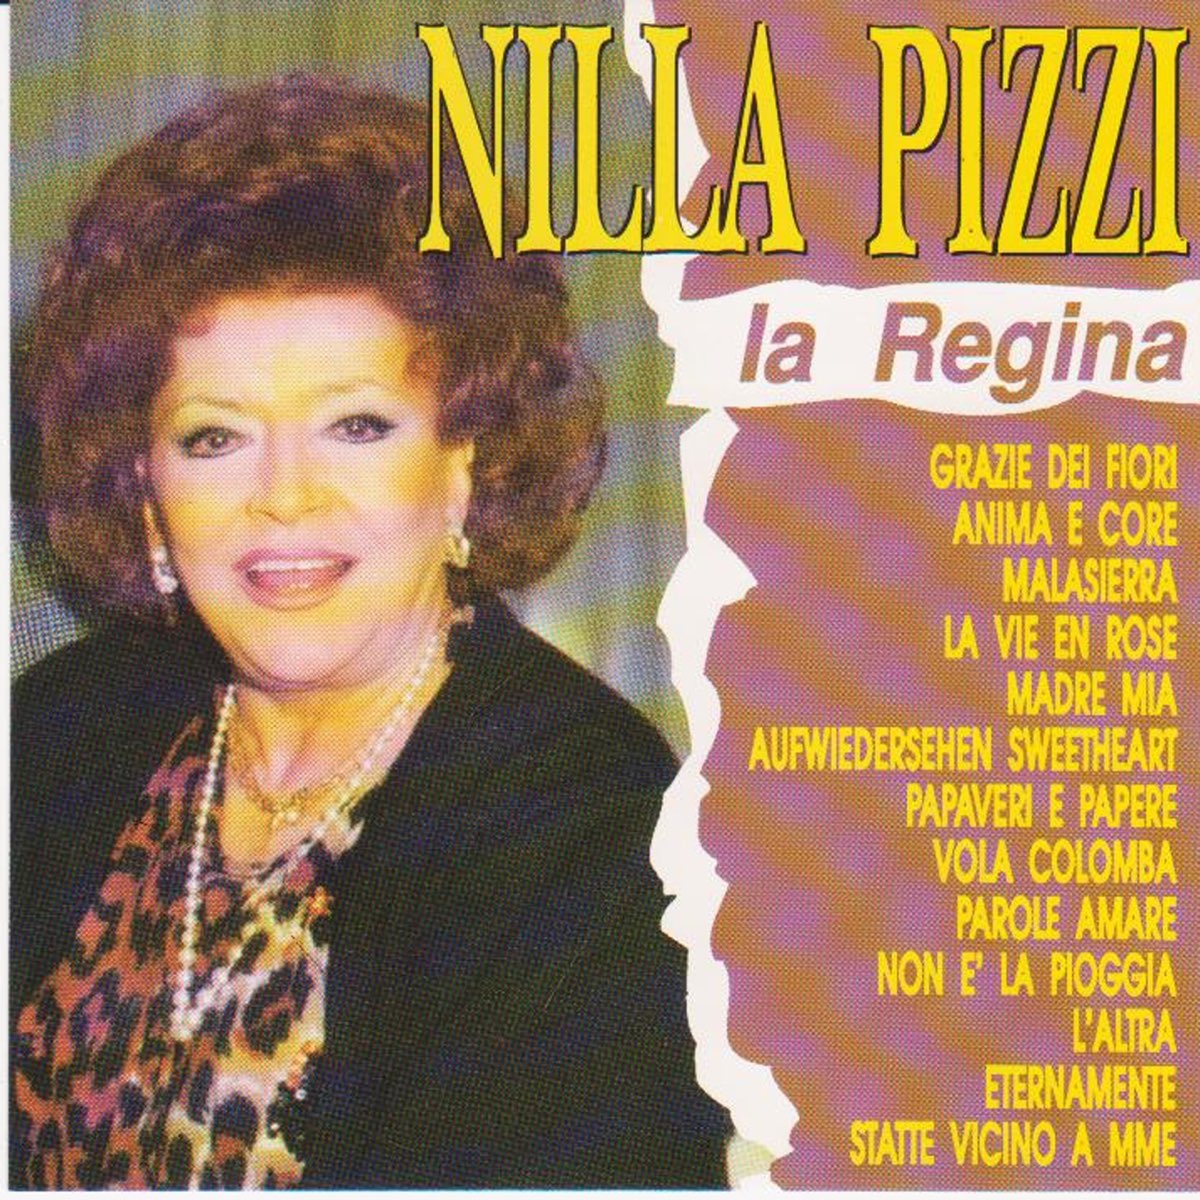 Nilla Pizzi la regina by Nilla Pizzi on Apple Music